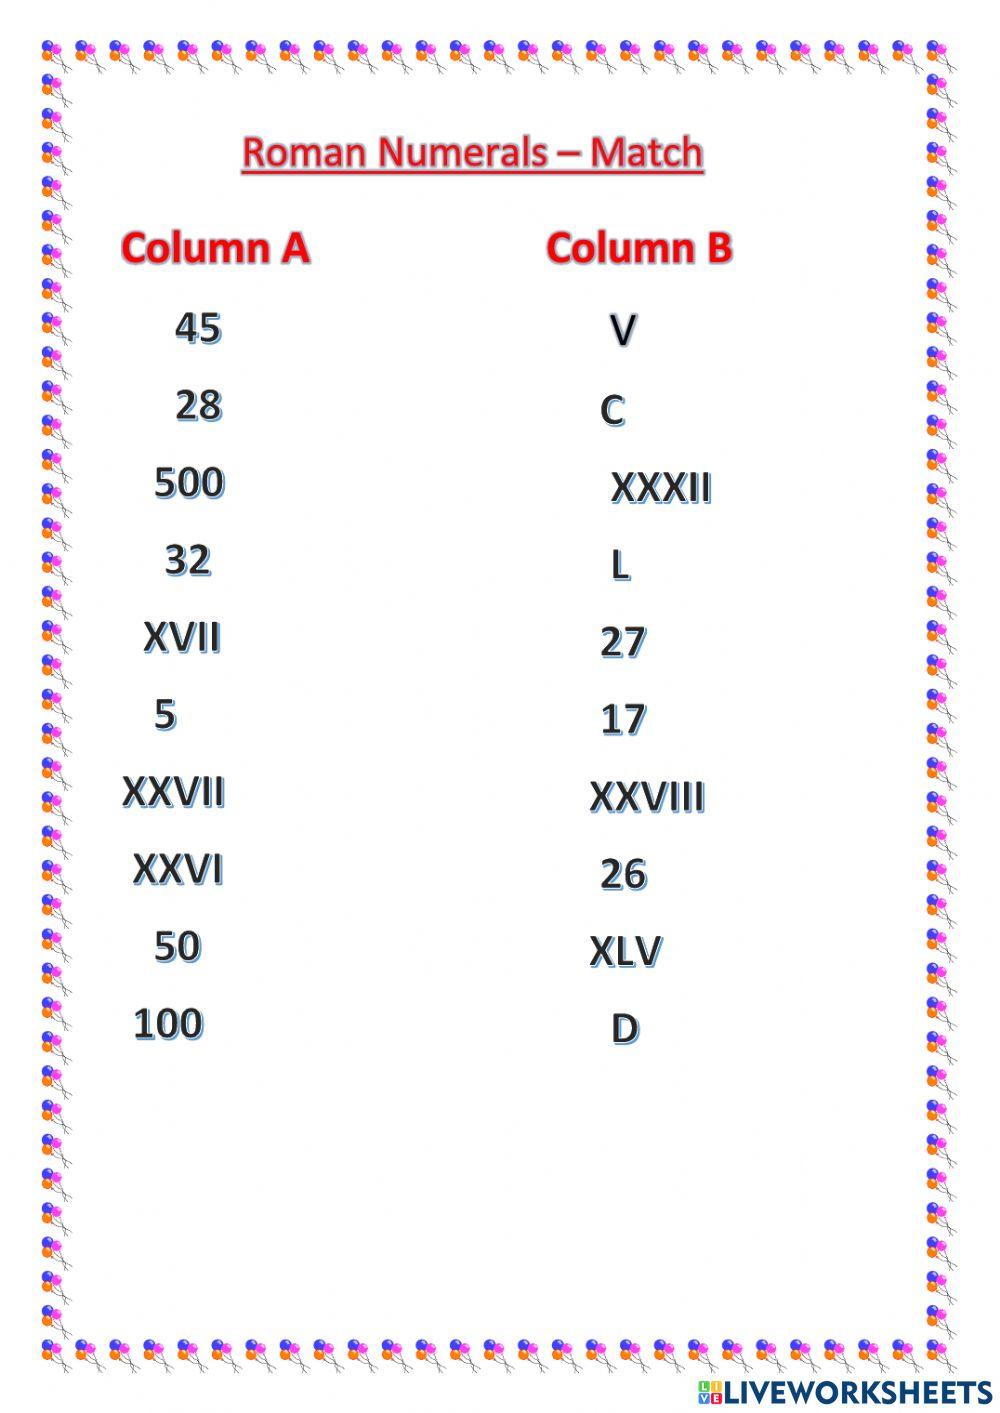 Roman numerals match